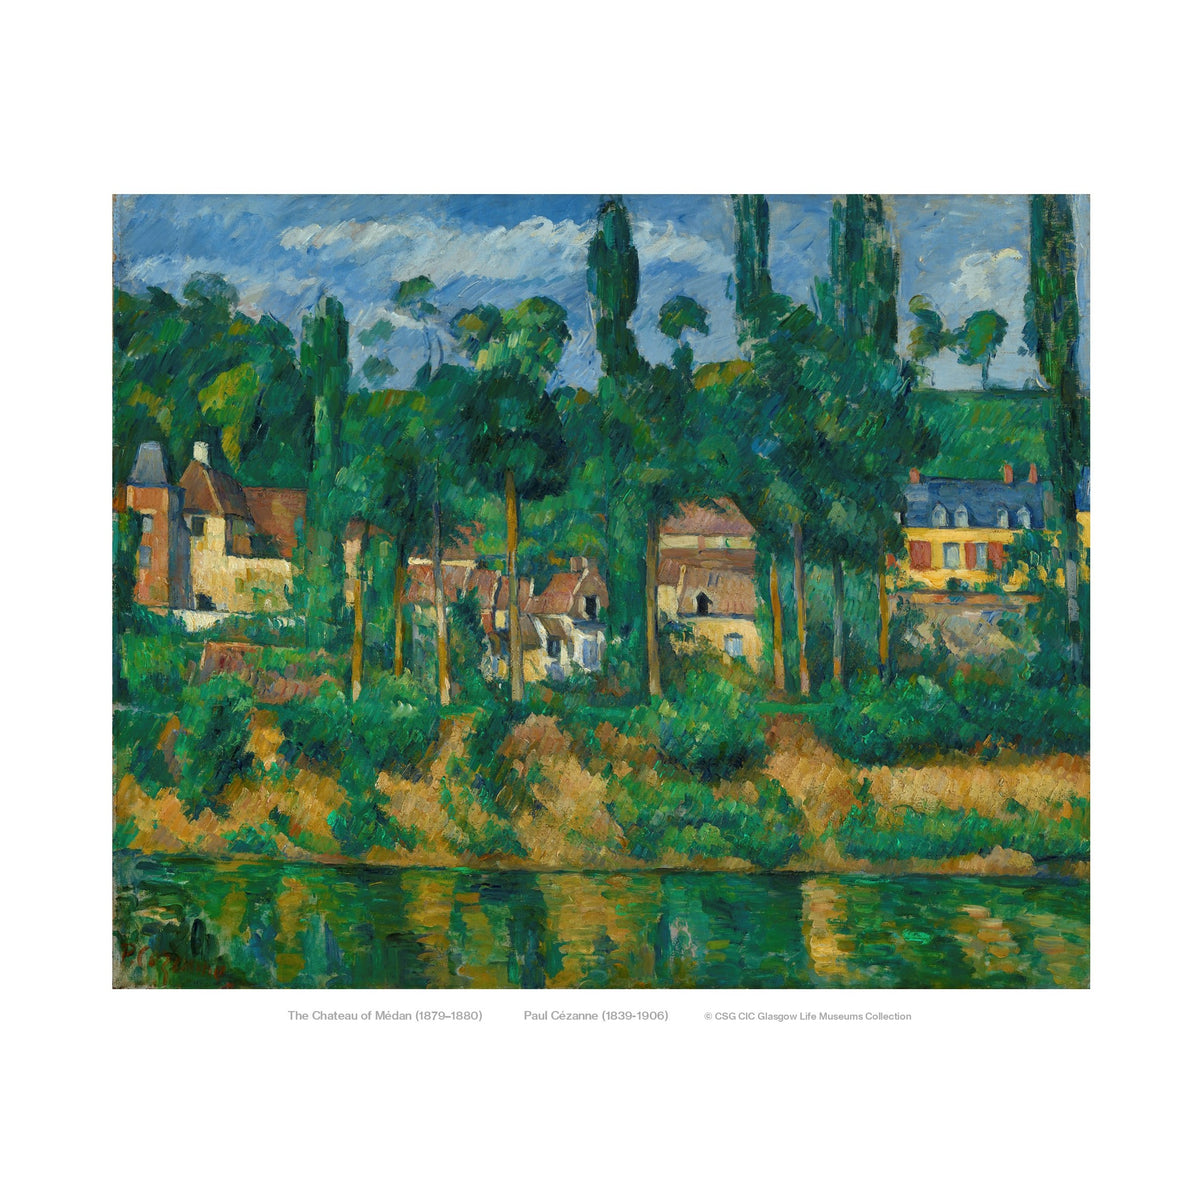 Paul Cezanne: The Chateau of Medan Print